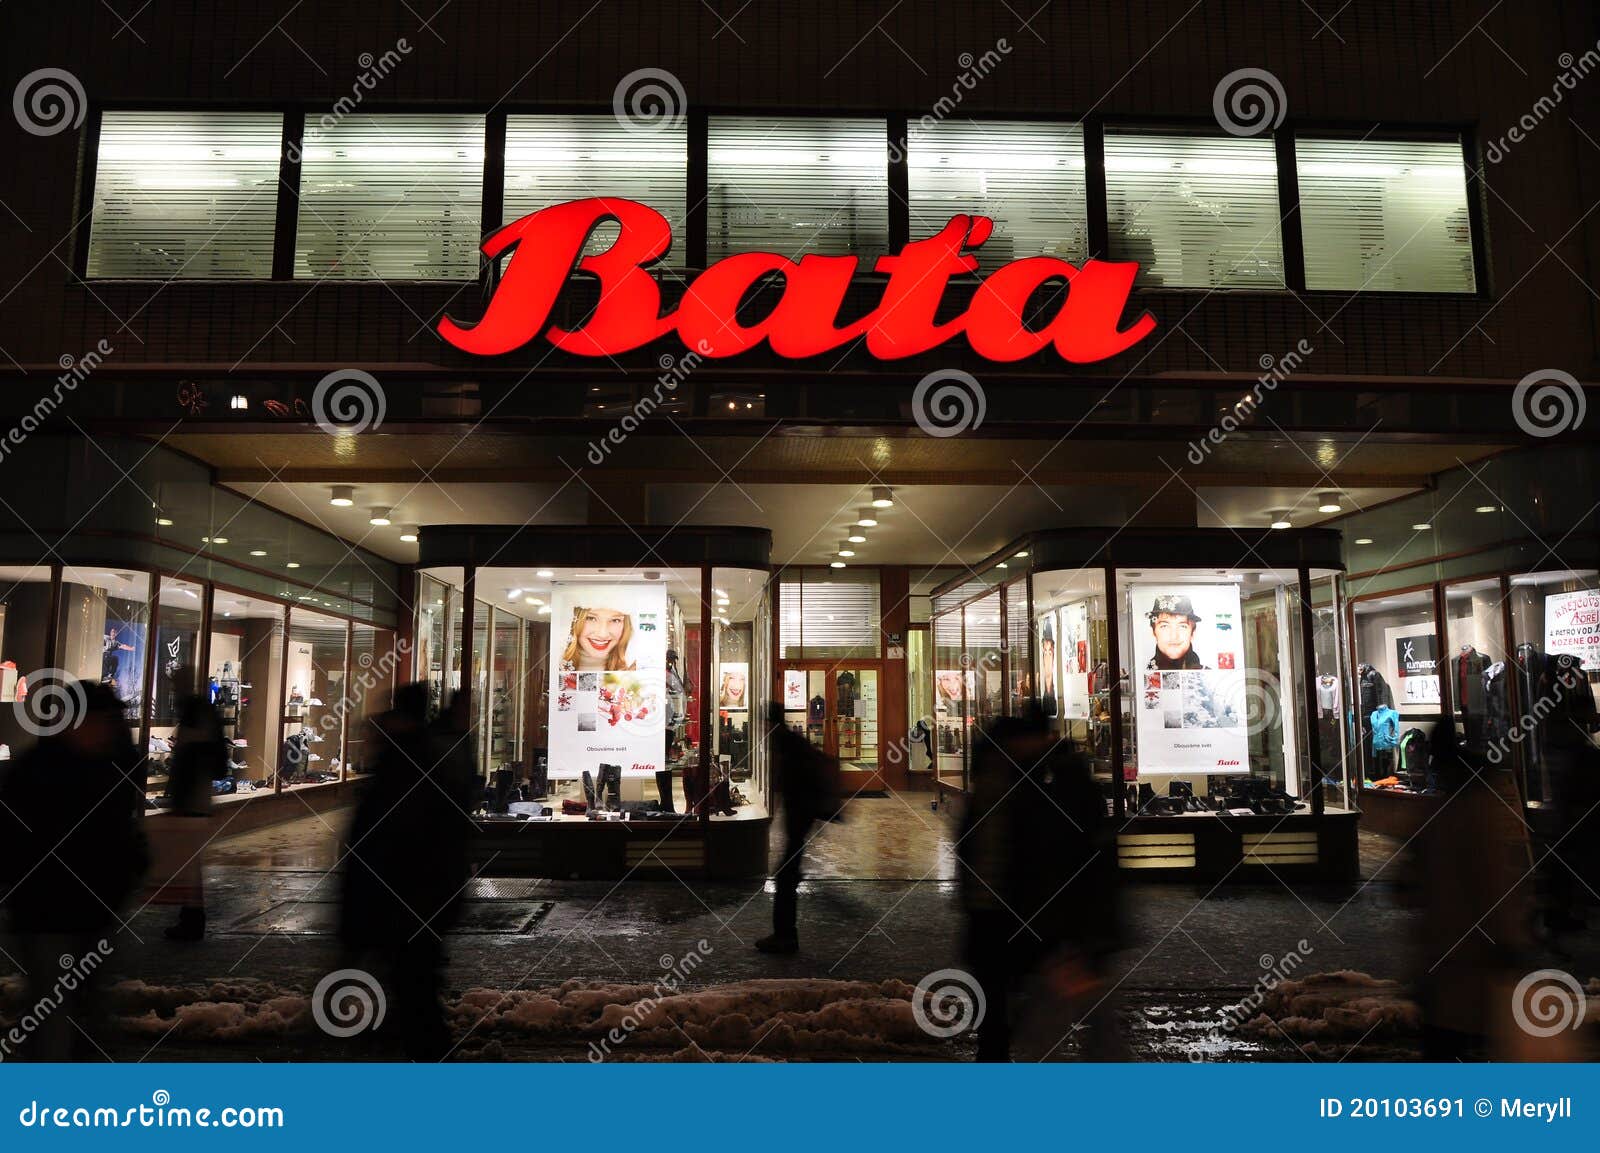 bata shoe shop